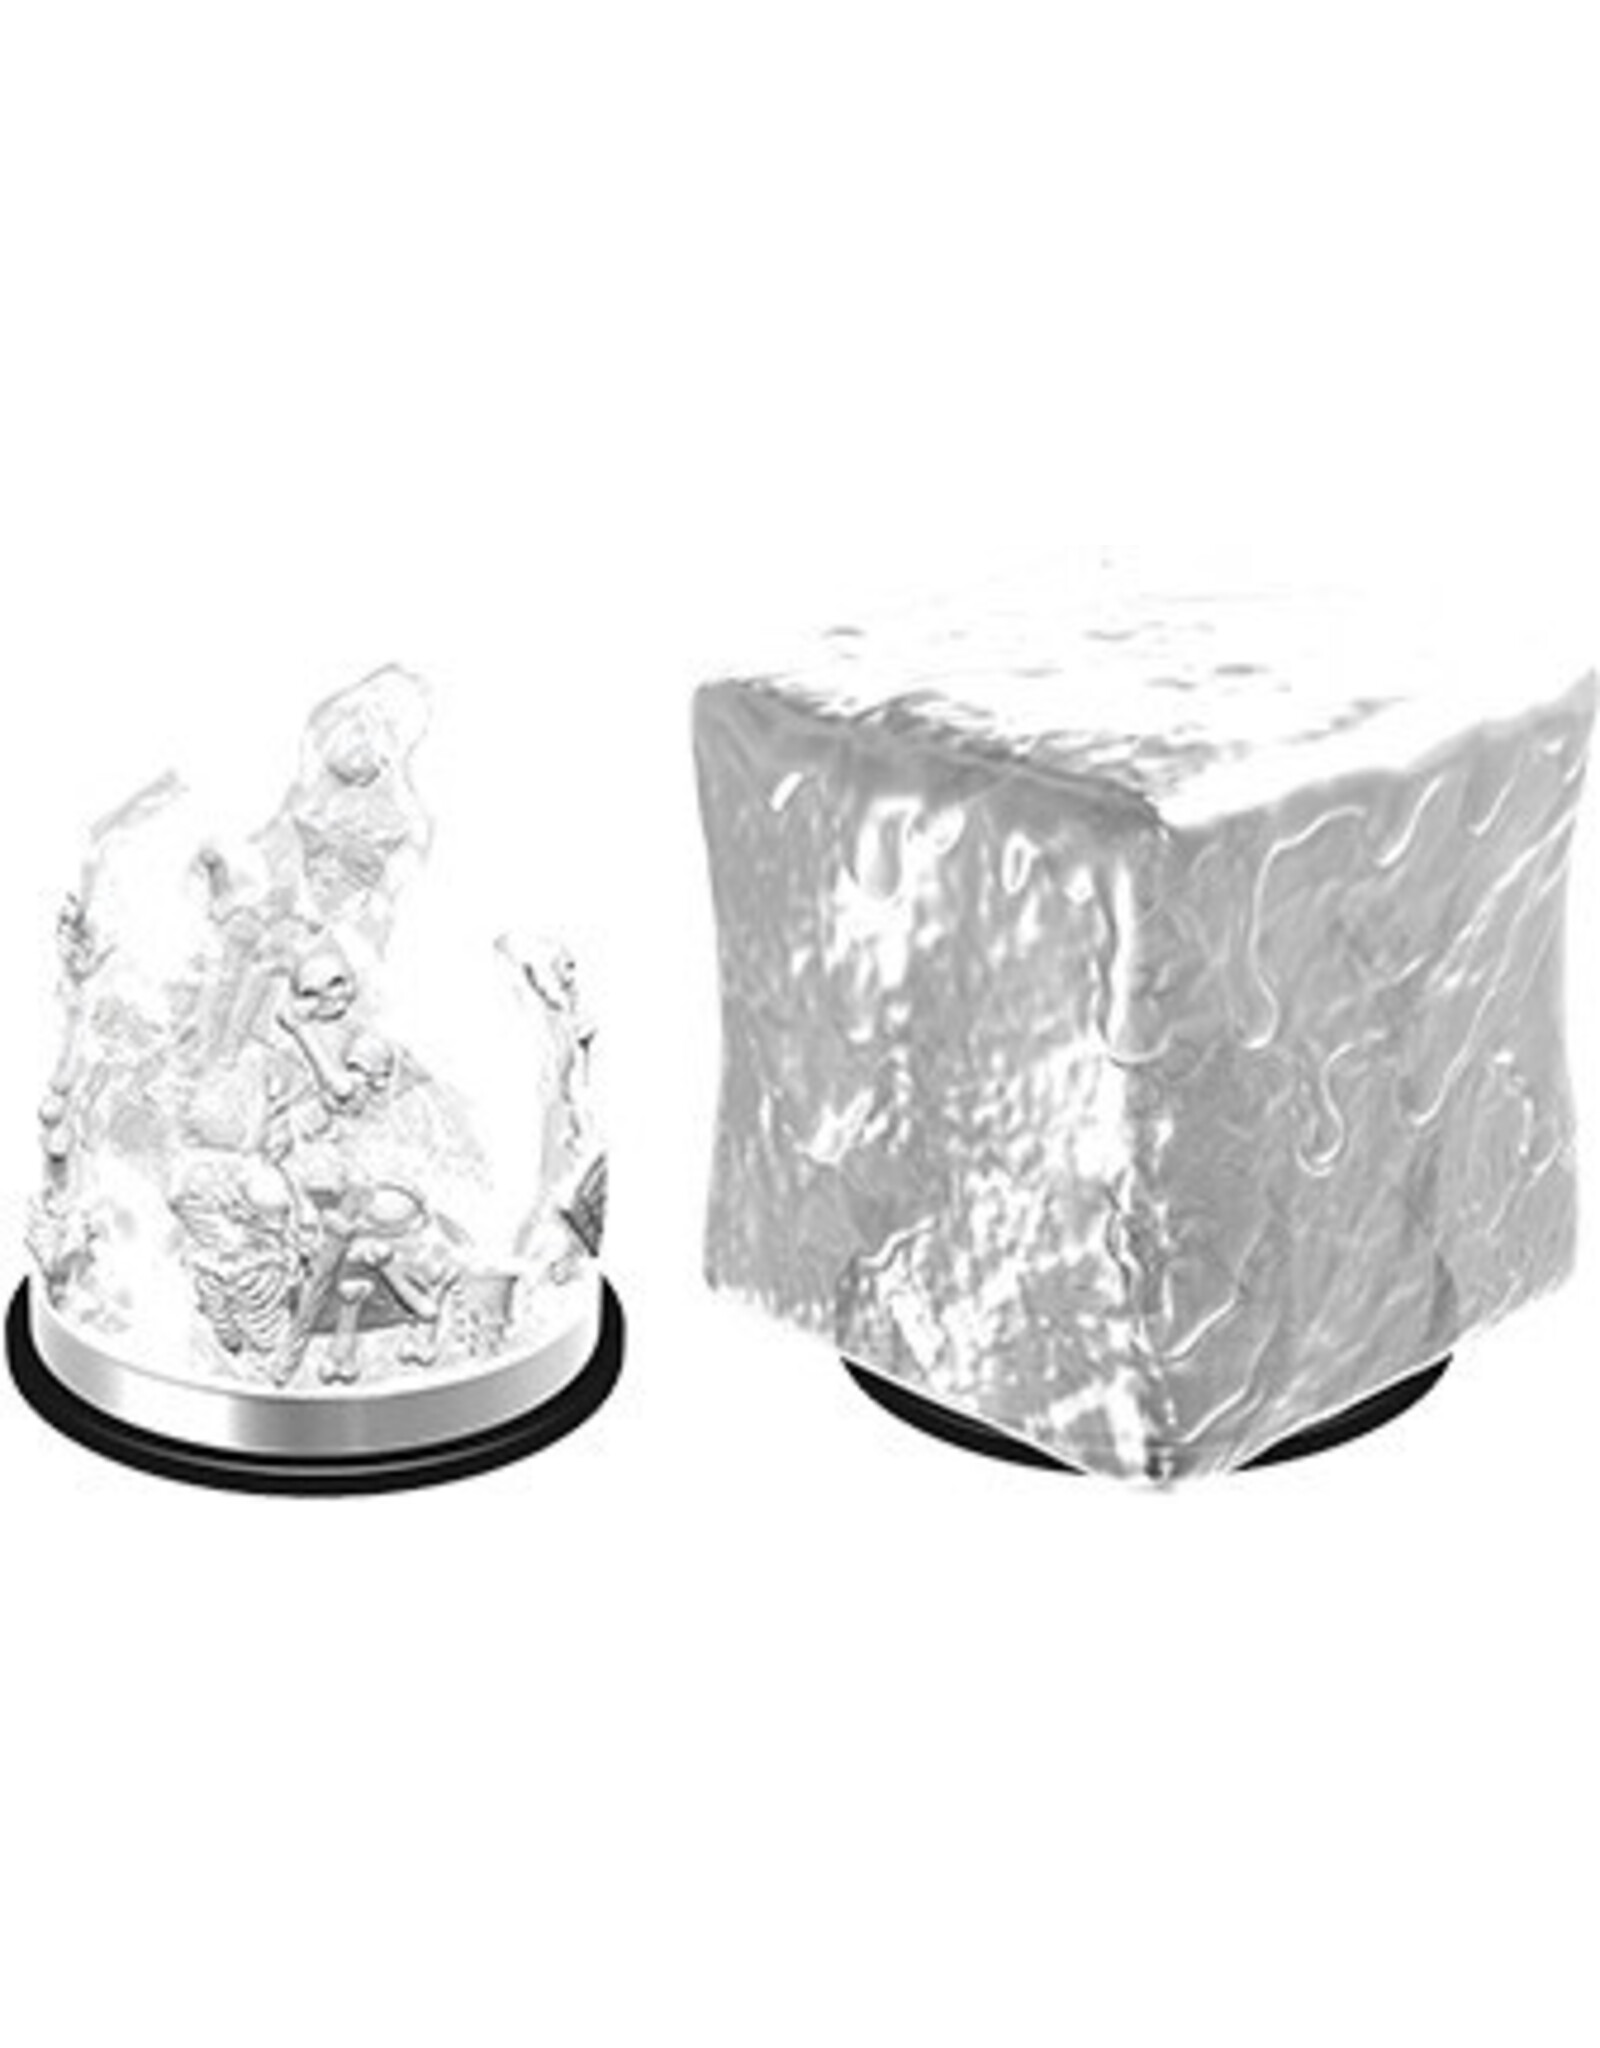 Wiz-Kids D&D Minis: W12.5 Gelatinous Cube